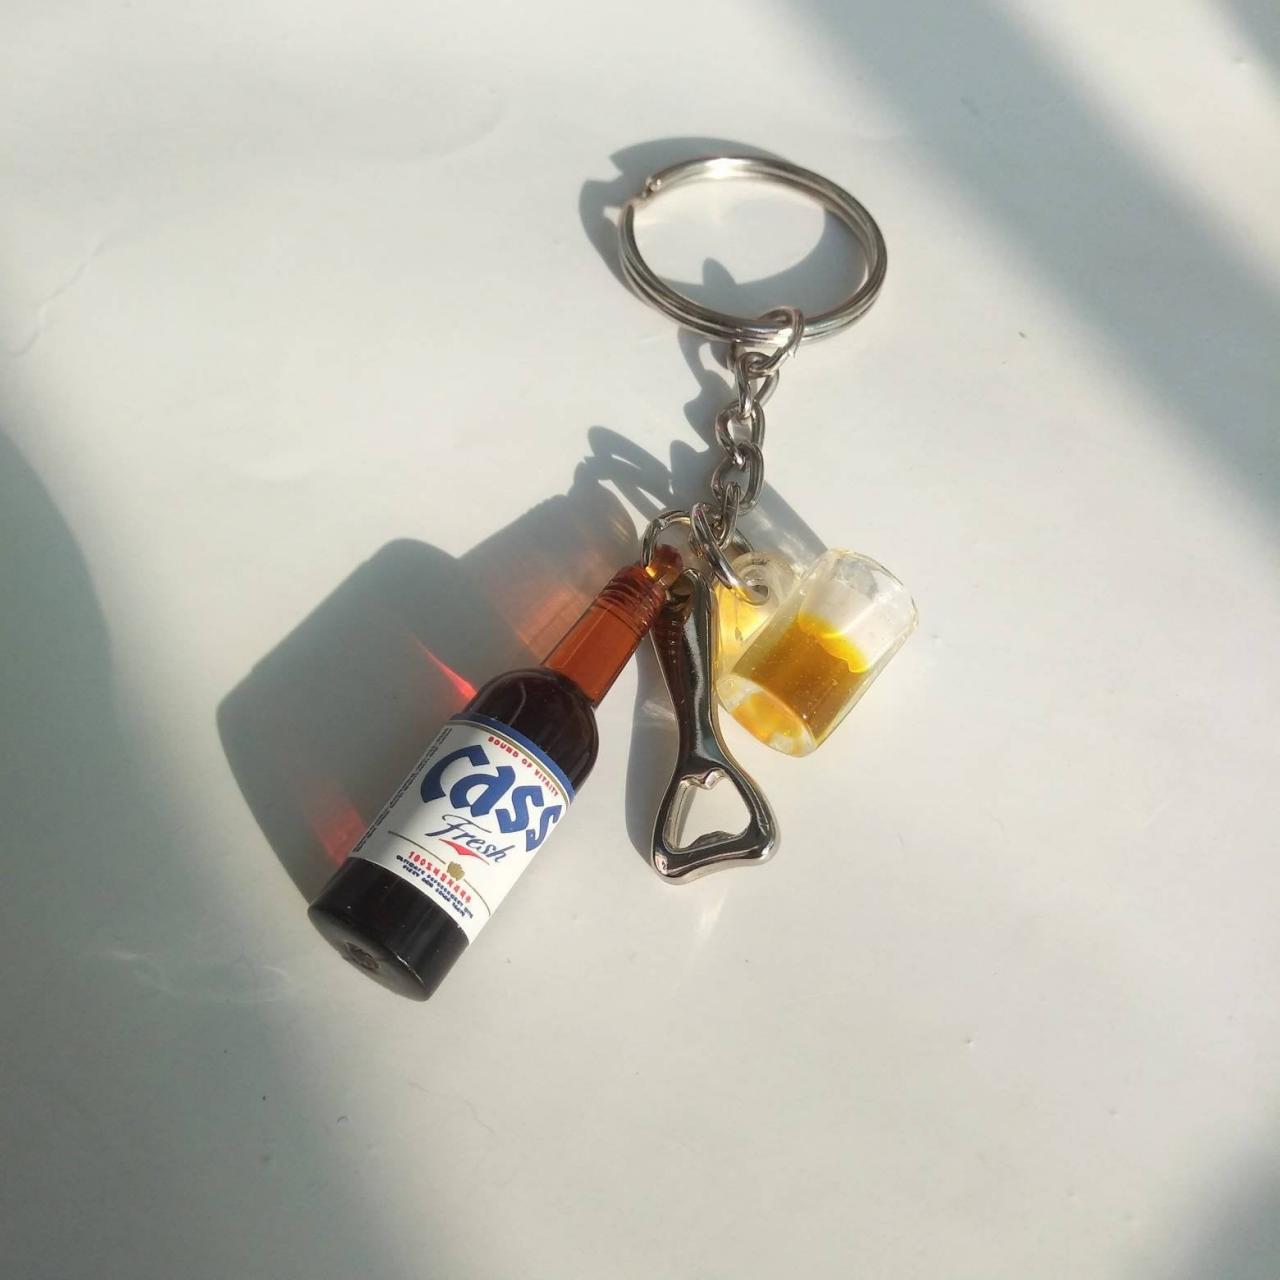 Korean 'cass' Beer Bottle With Bottle Opener And Beer Mug Keychain, Drink Bottle Keychain, Food And Drink